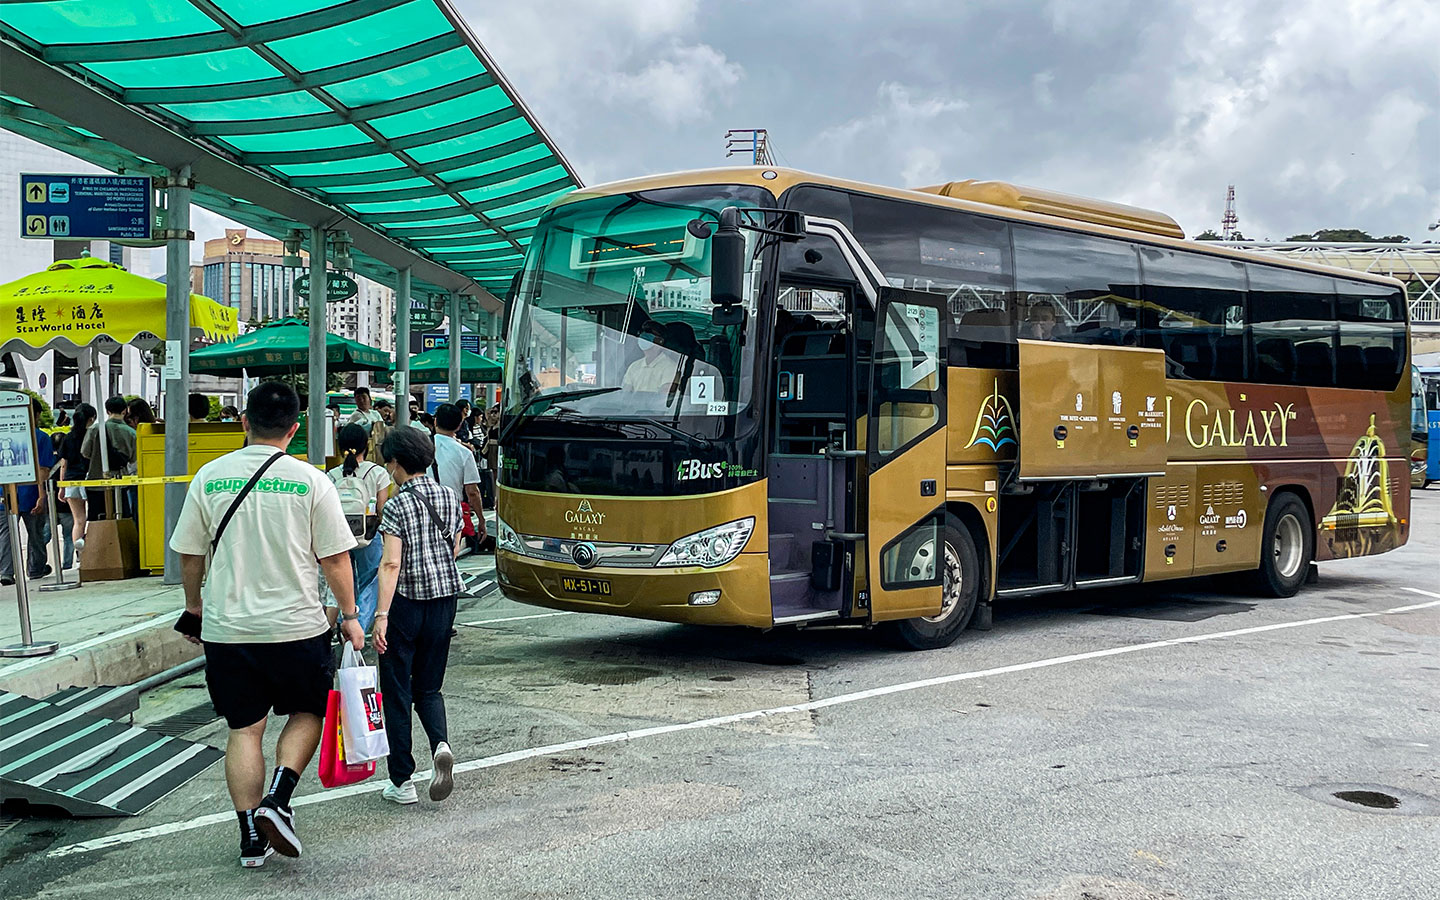 Macao casino hotel shuttle buses